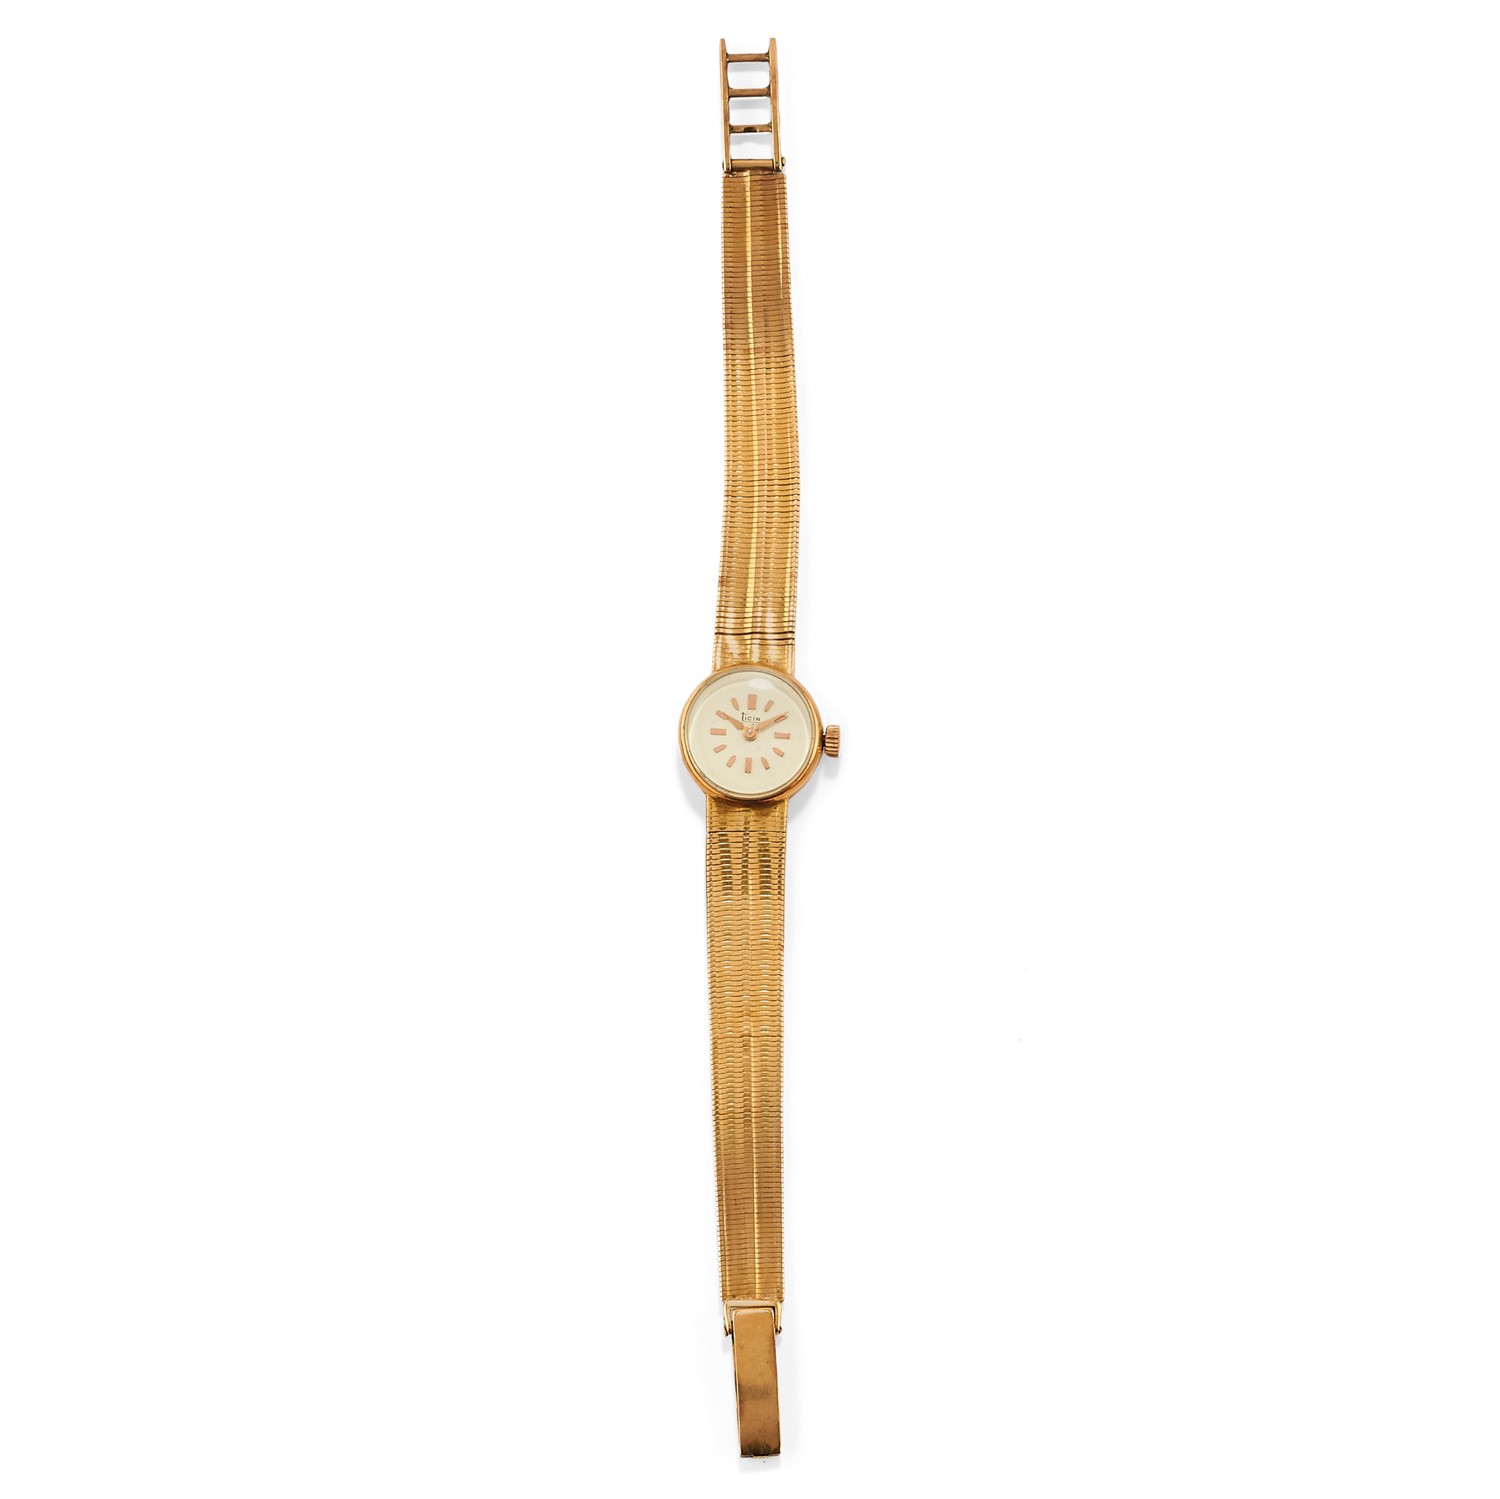 Ticin - A 18K yellow gold lady's wristwatch, Ticin - A 18K yellow gold lady's [...]